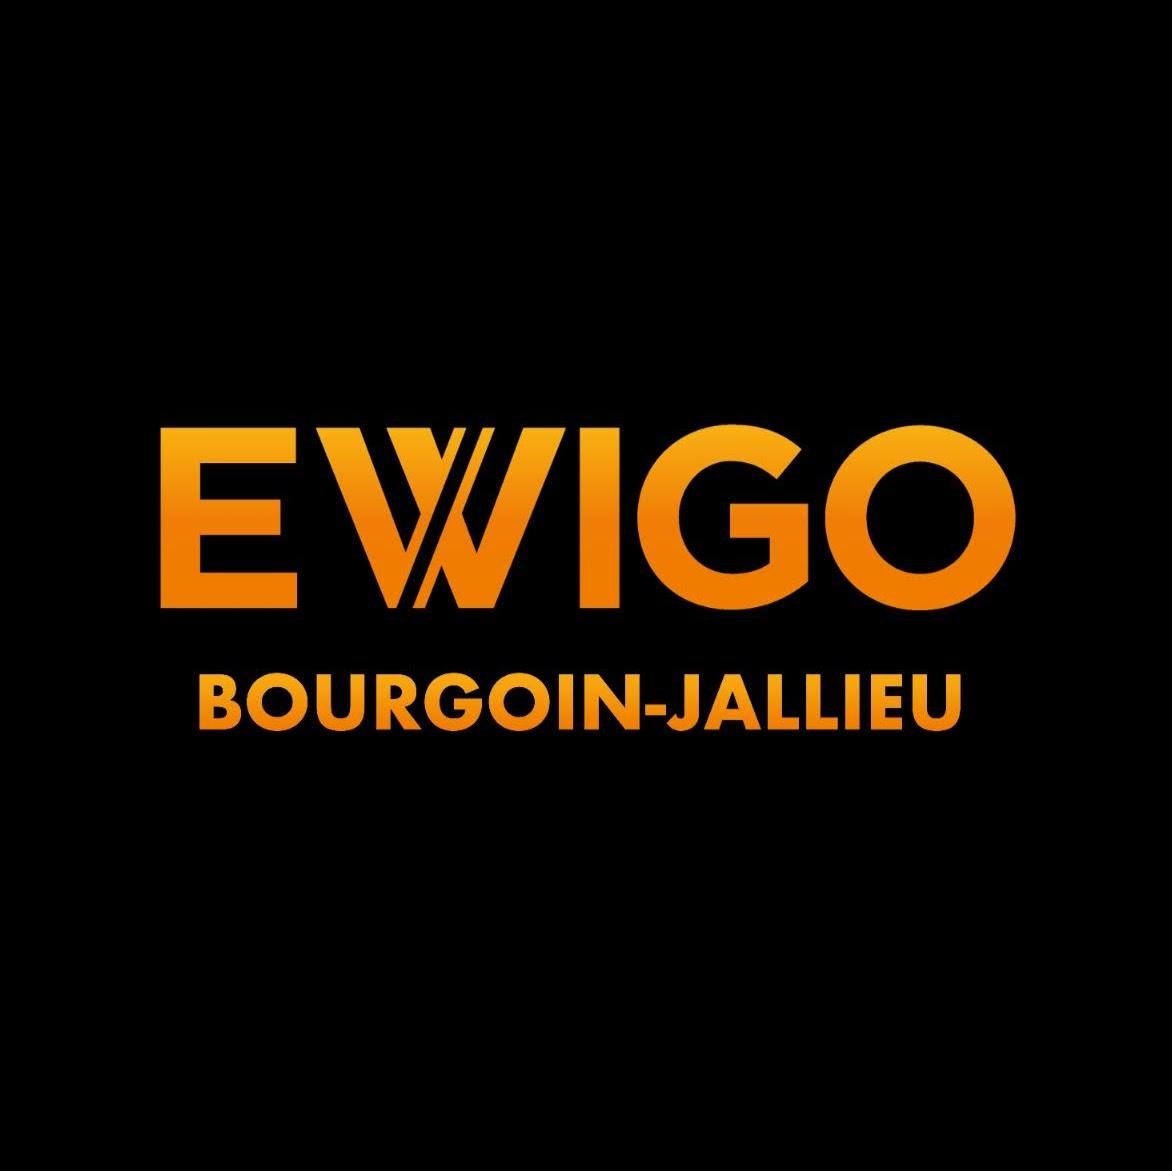 Ewigo Bourgoin-jallieu - Achat, Vente, Reprise, Bourgoin Jallieu